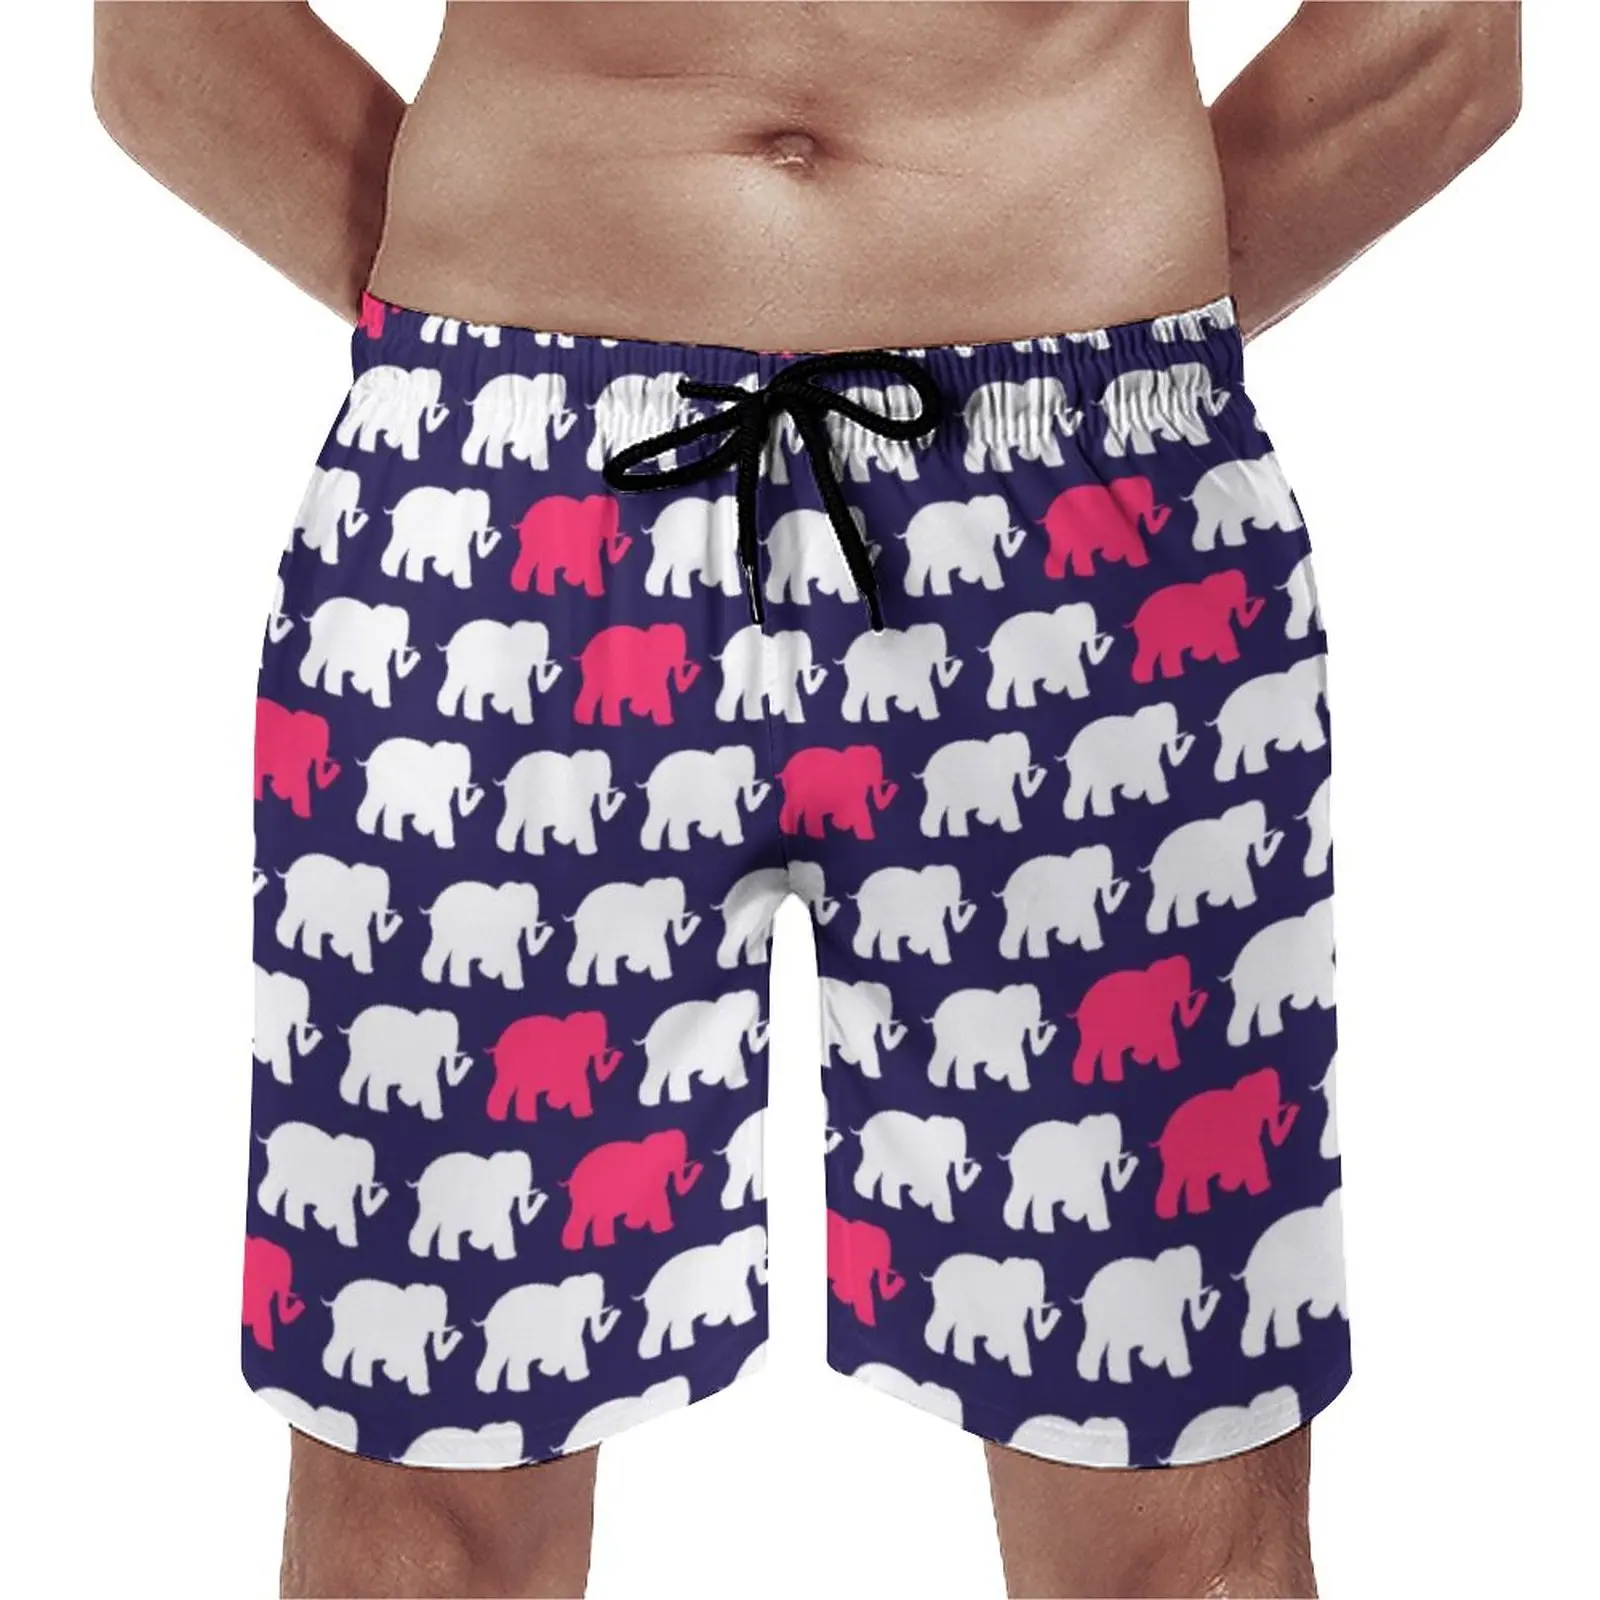 

Elephant Art Board Shorts Blue and Pink Elephants Design Beach Shorts Hot Sale Men Comfortable Customs Swimming Trunks Plus Size